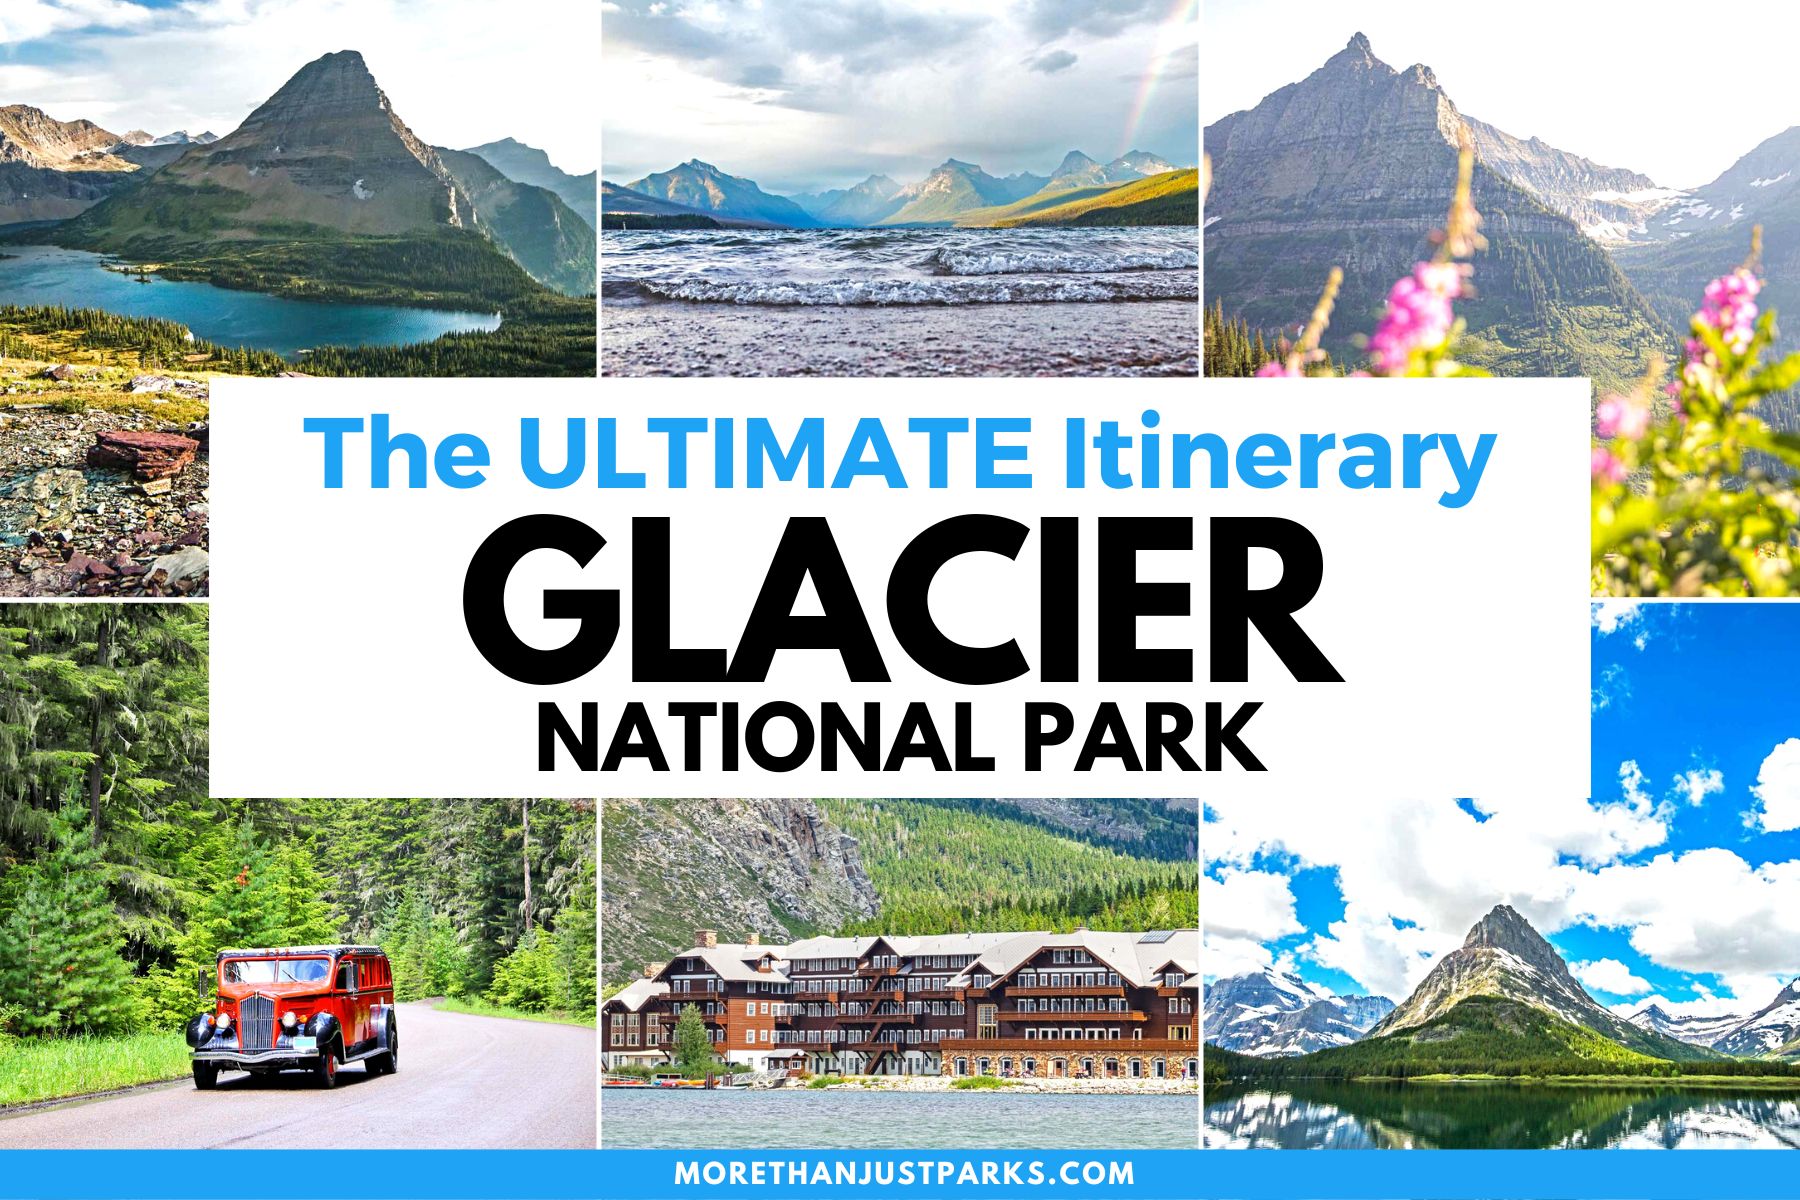 glacier national park itinerary, 3 day glacier national park itinerary, 5 day glacier national park itinerary, 7 day glacier national park itinerary, glacier national park trip